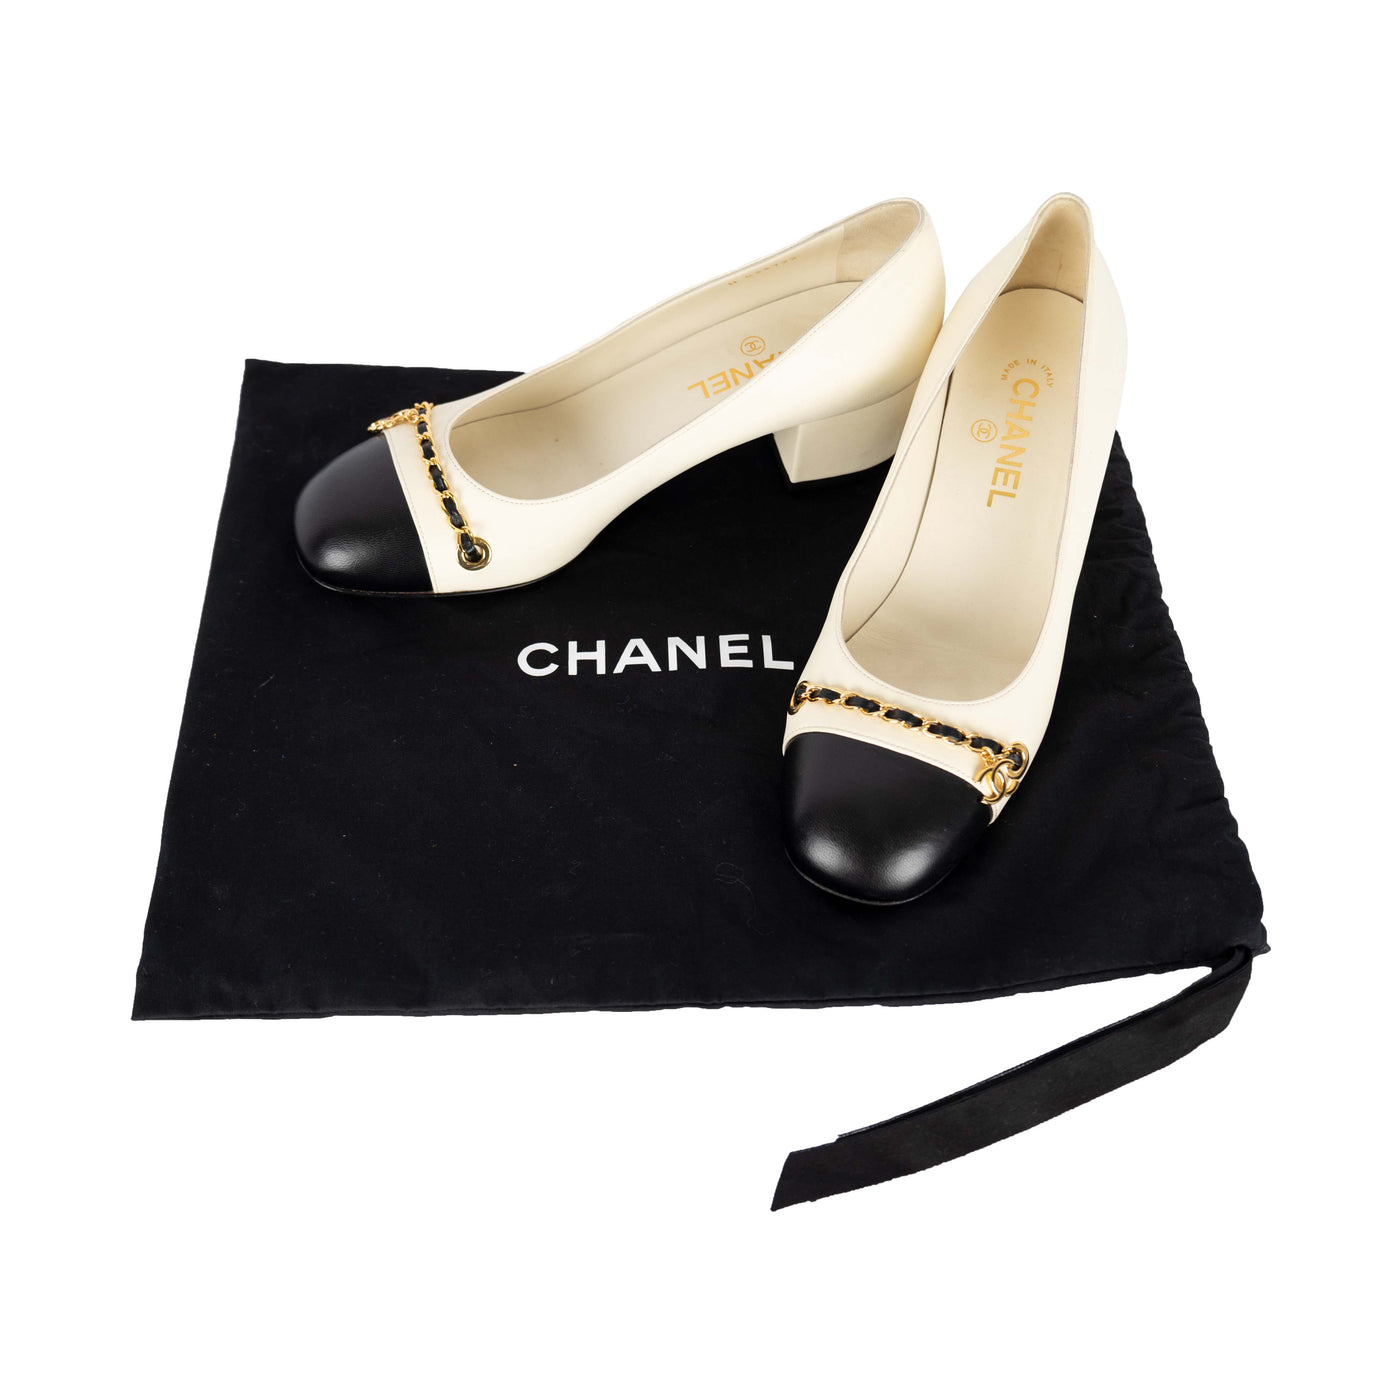 Secondhand Chanel Bi-color Block Heel Pumps